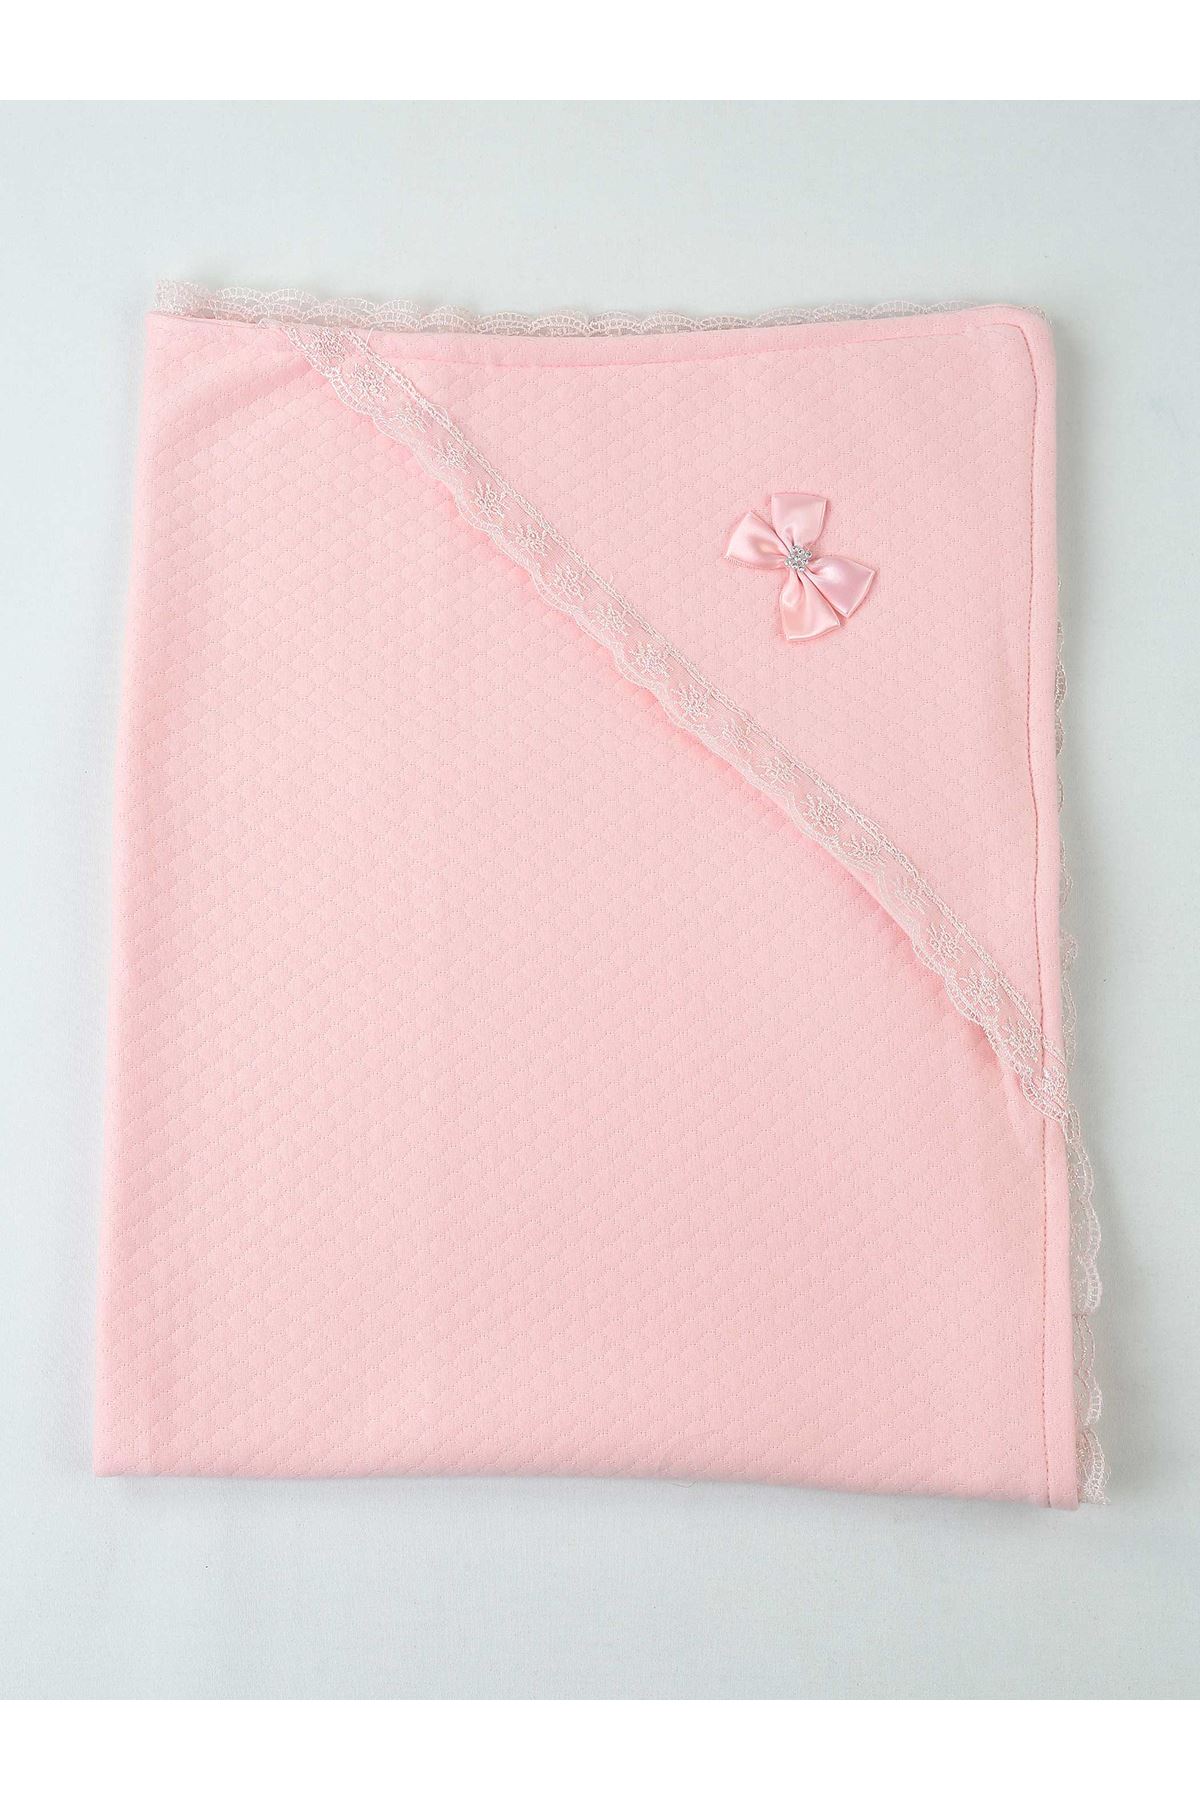 Pink 85 X85 cm Girl Baby Swaddle Blanket